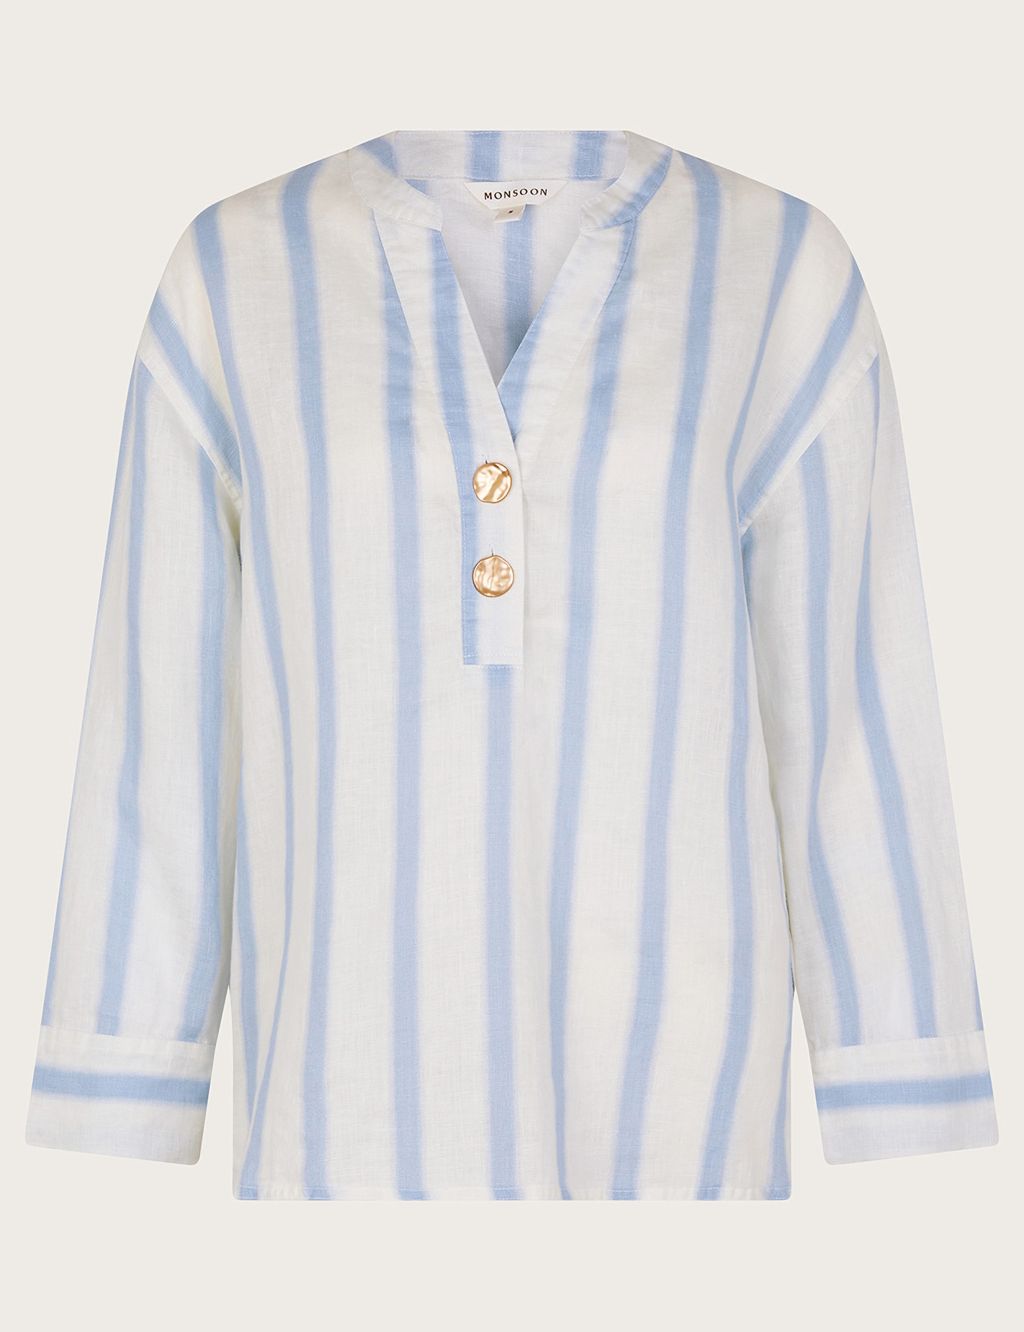 Pure Linen Striped T-Shirt 1 of 5